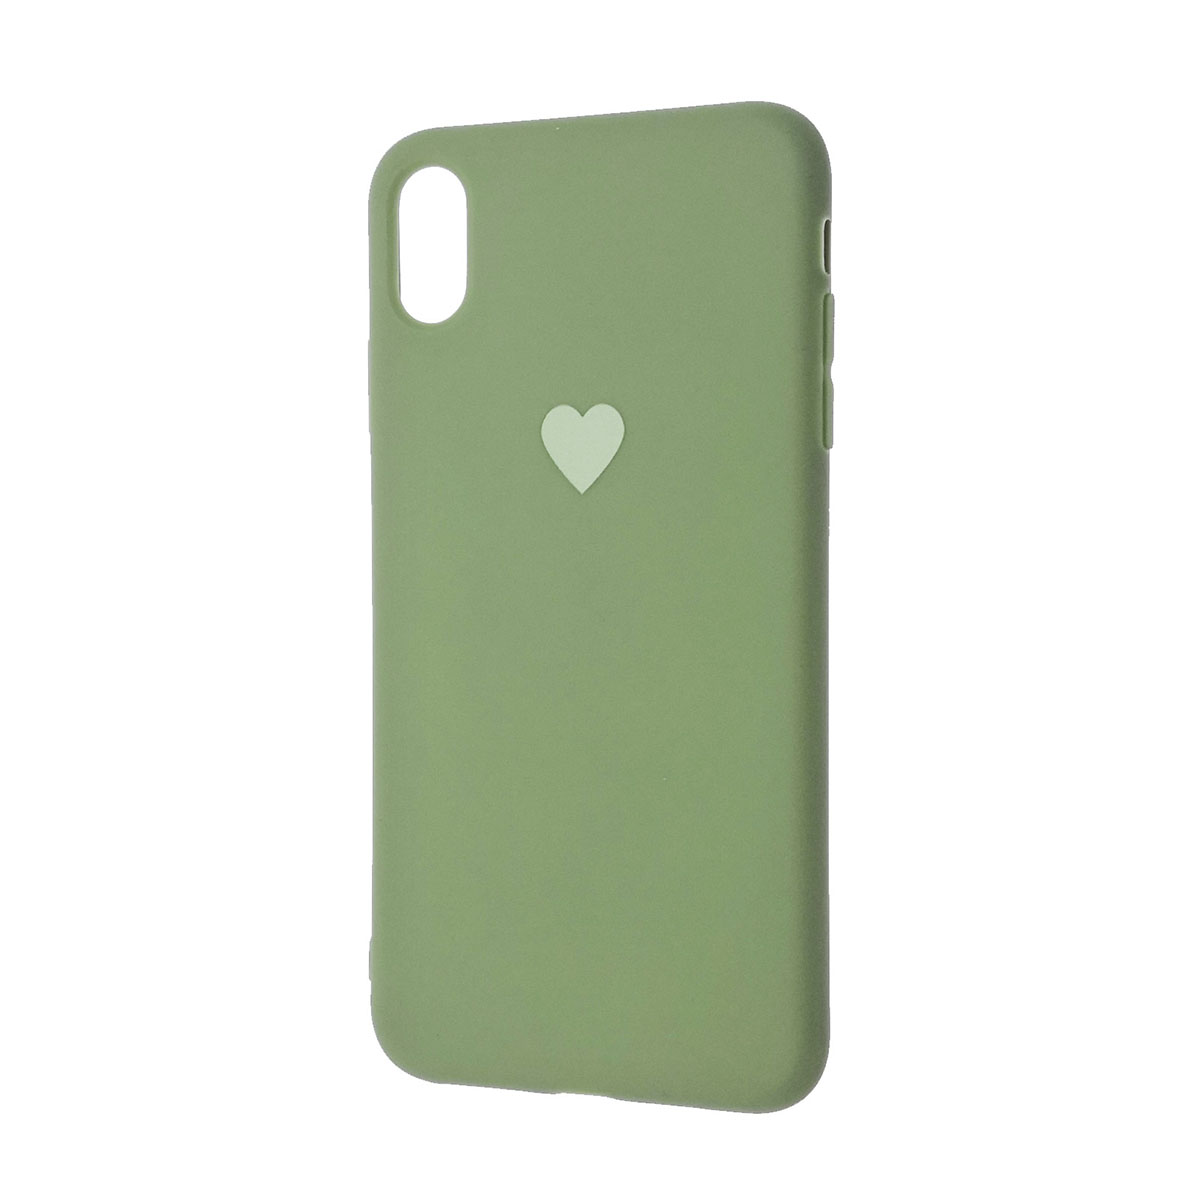 Чехол накладка для APPLE iPhone XS Max, силикон, матовый, рисунок Зеленое сердце.